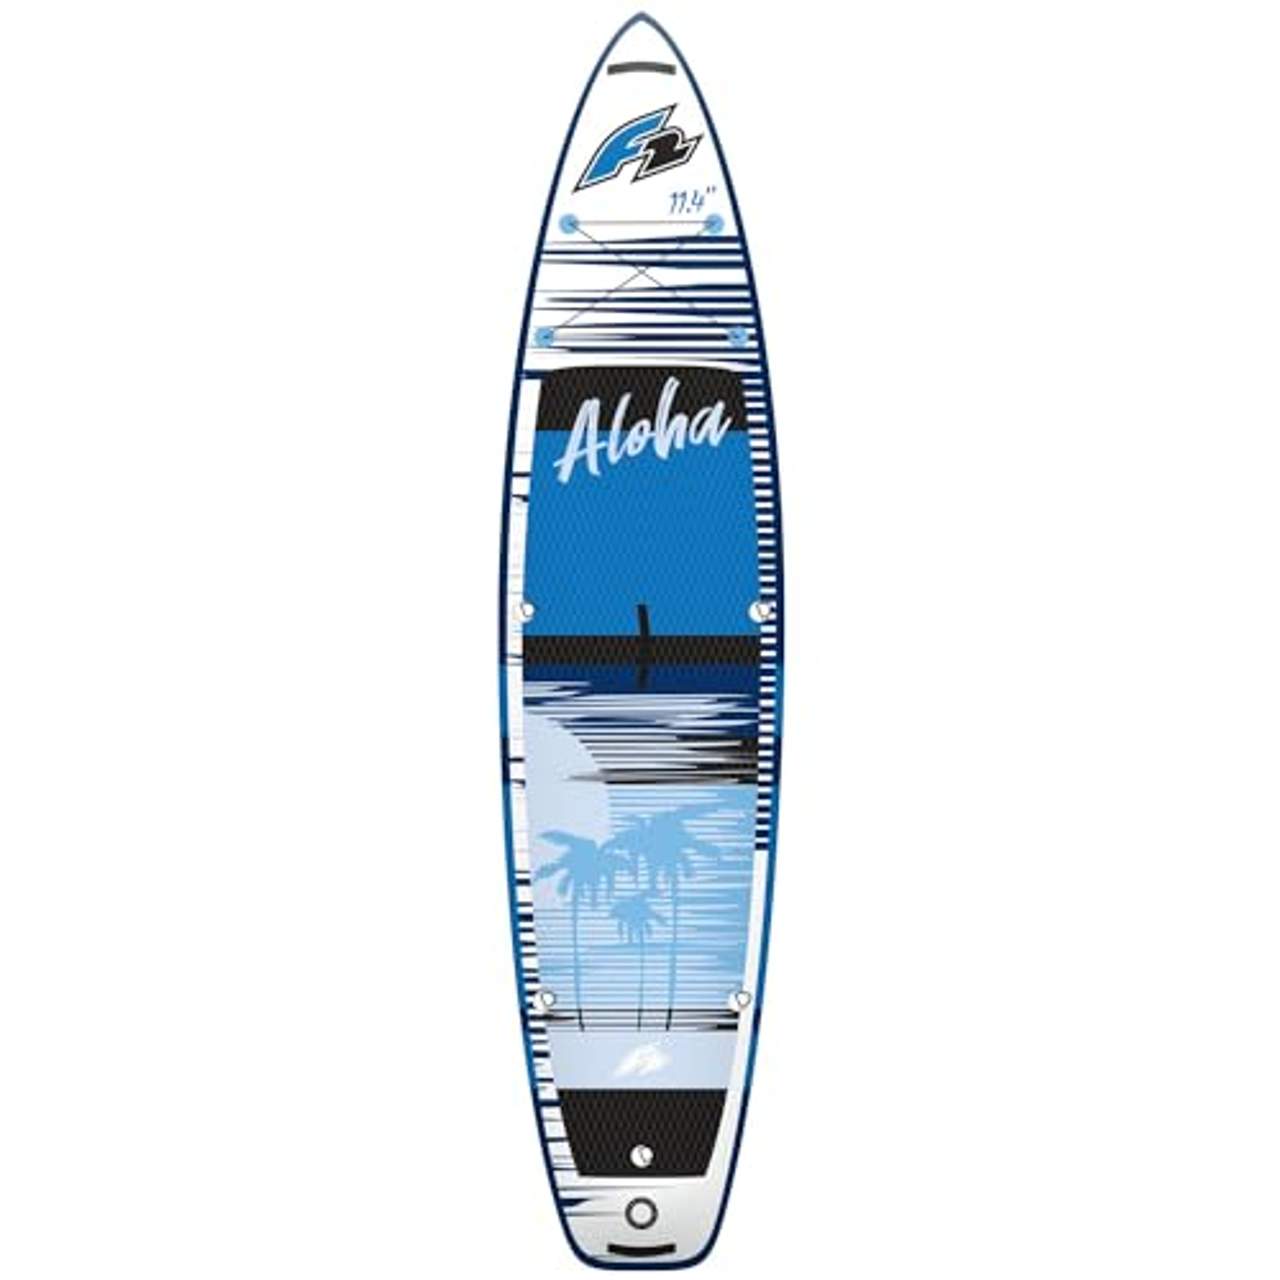 Campsup SUP F2 Aloha 11'4" Blue Aufblasbares Stand Up Paddle Board